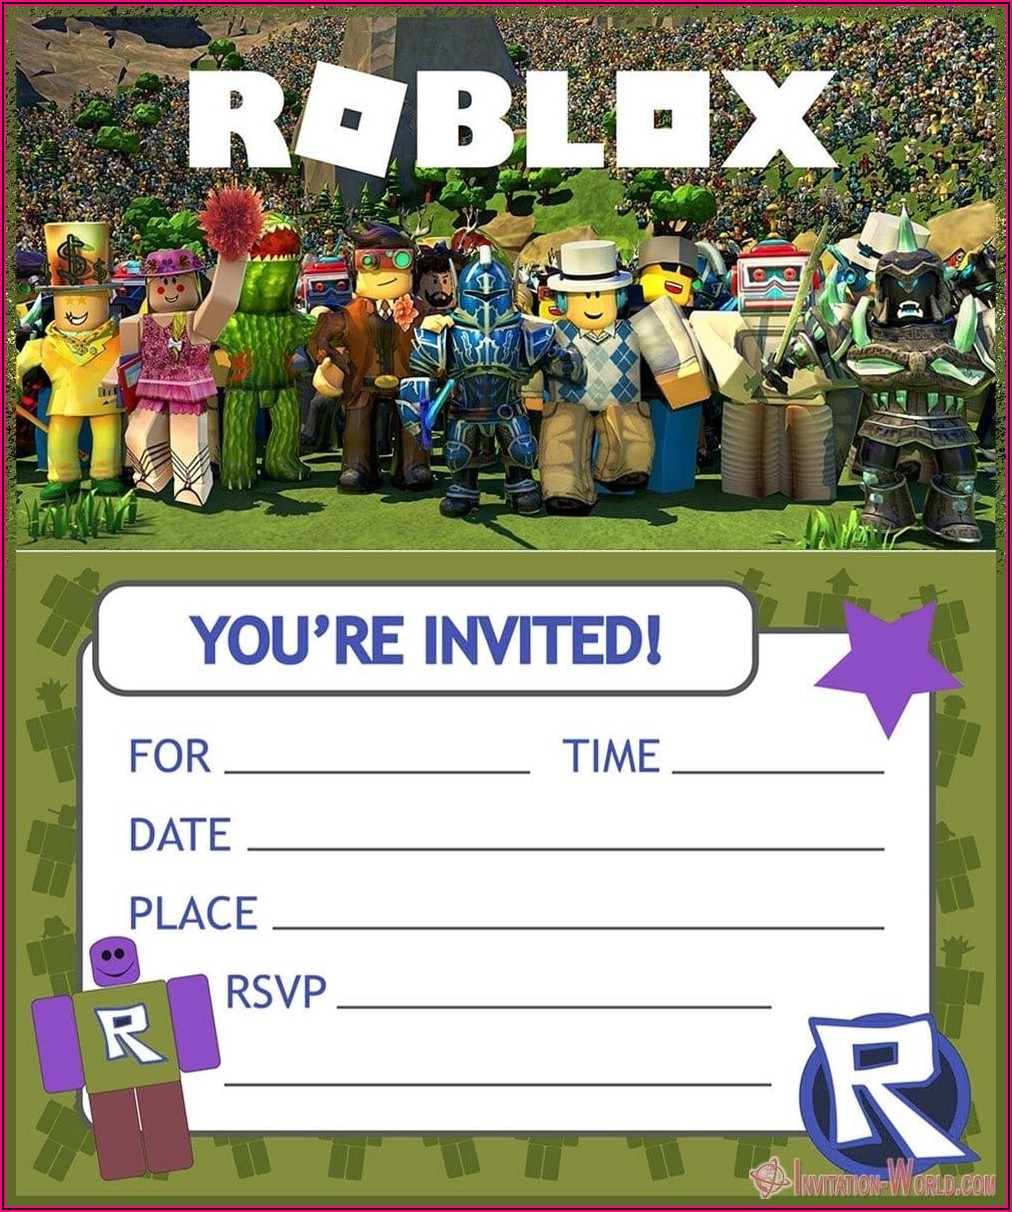 Roblox Birthday Party Invitation Template Free Invitations Resume Examples 0g27lZ0b9P